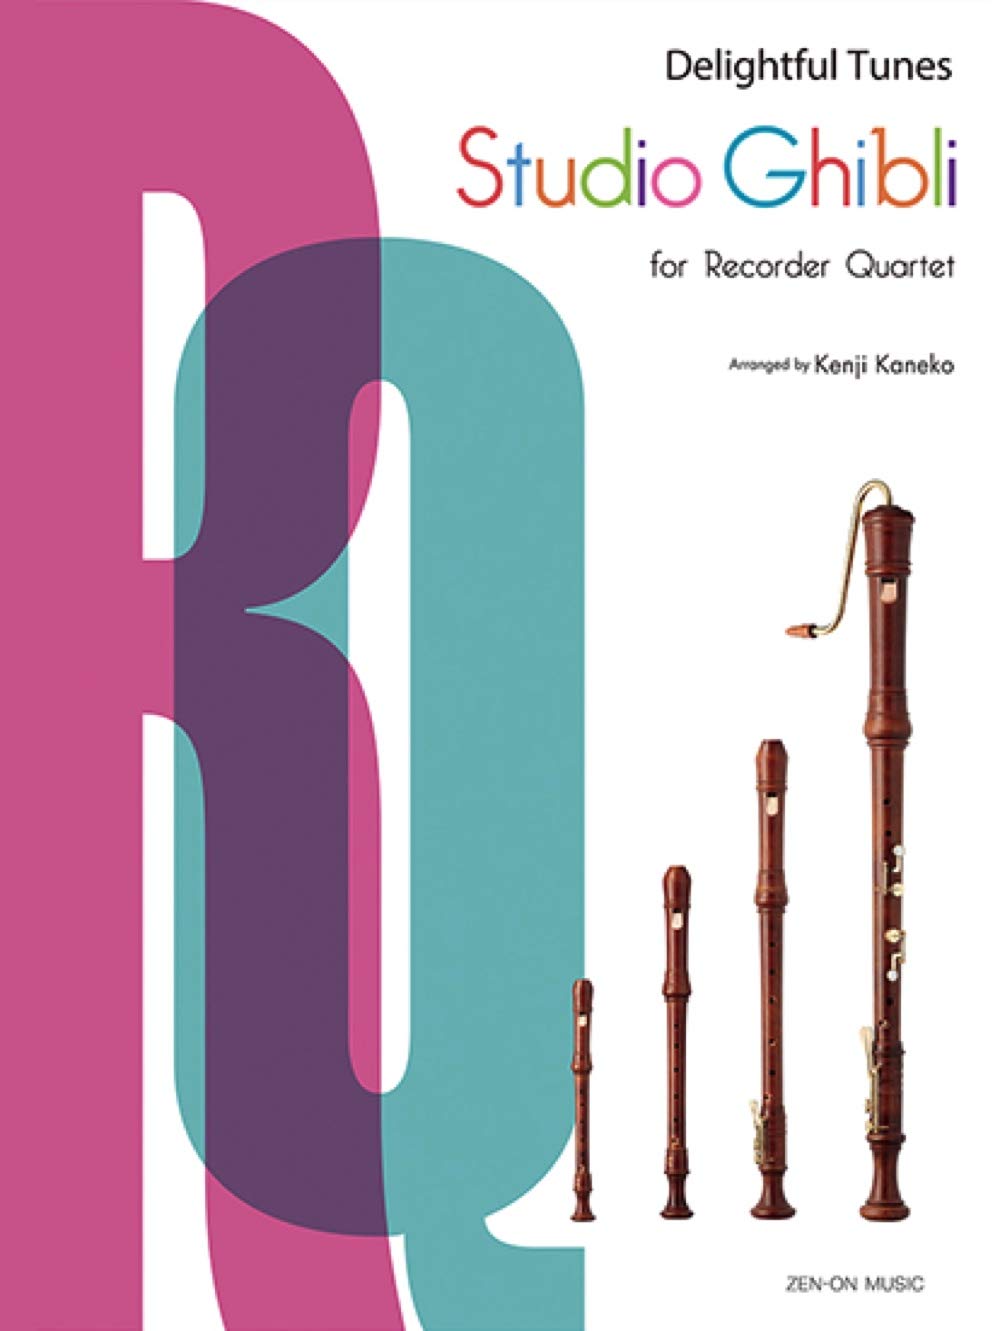 Delightful Tunes Studio Ghibli for Recorder Quartet